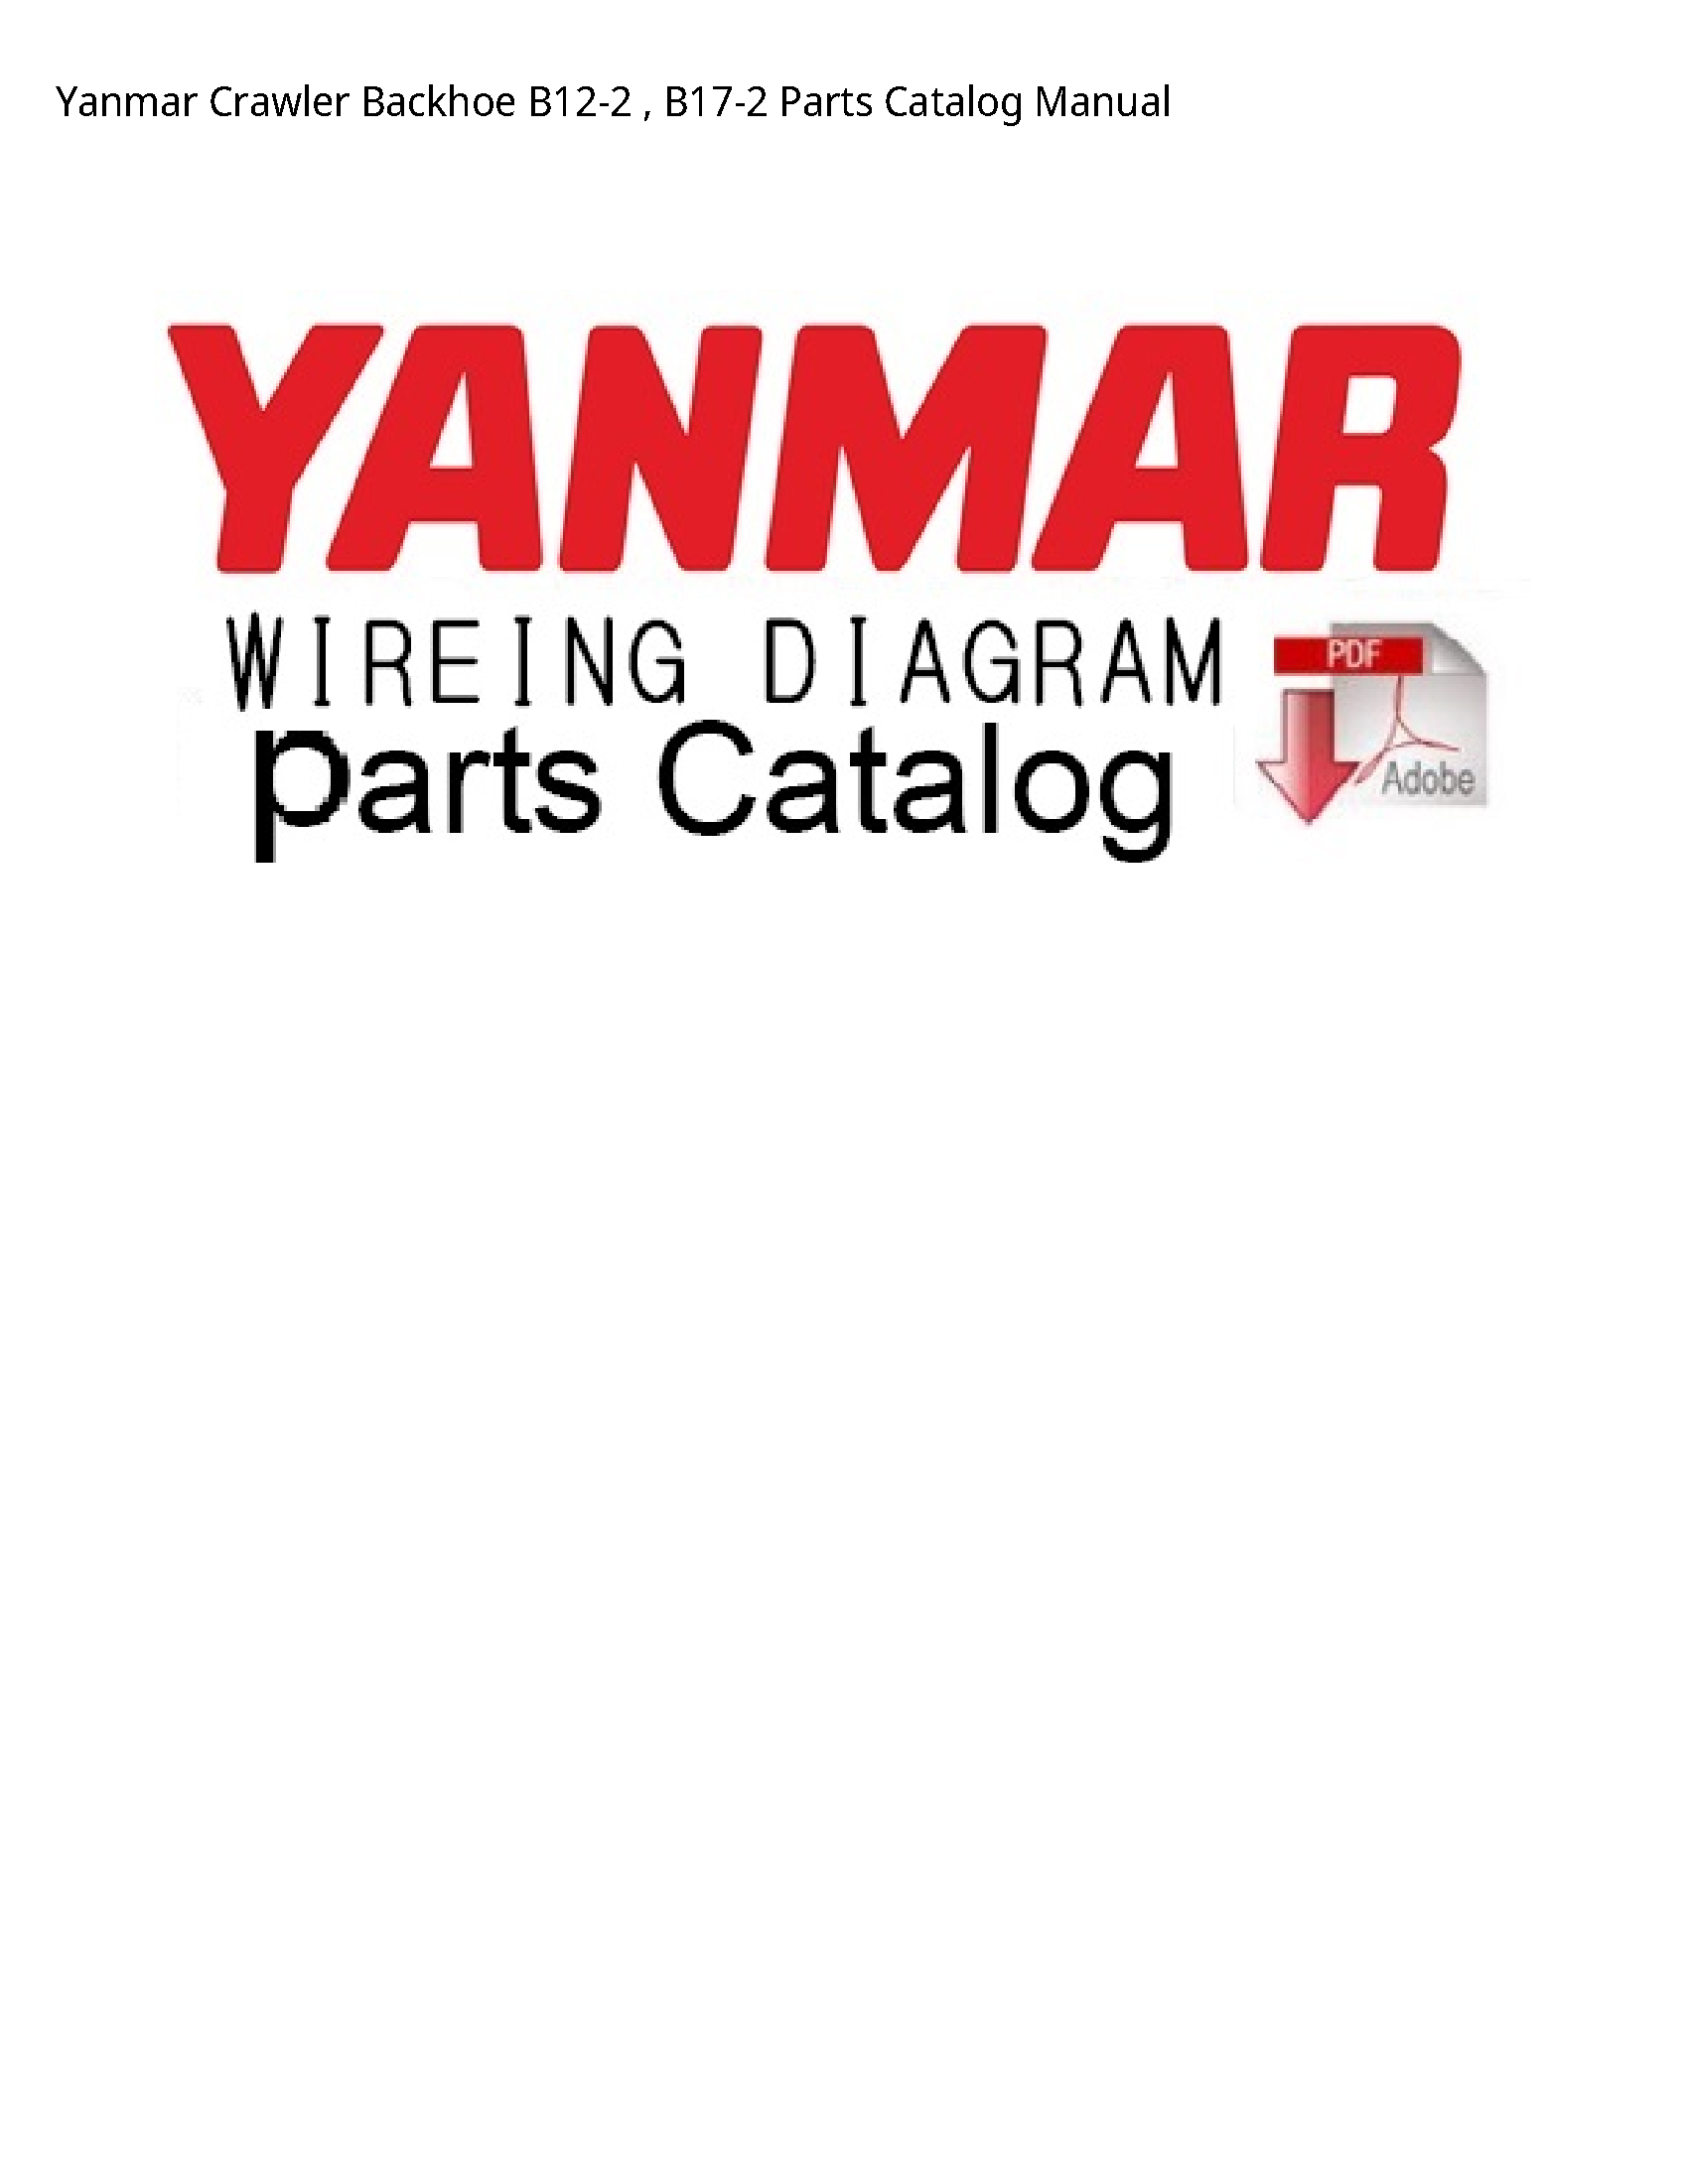 Yanmar B12-2 Crawler Backhoe Parts Catalog manual